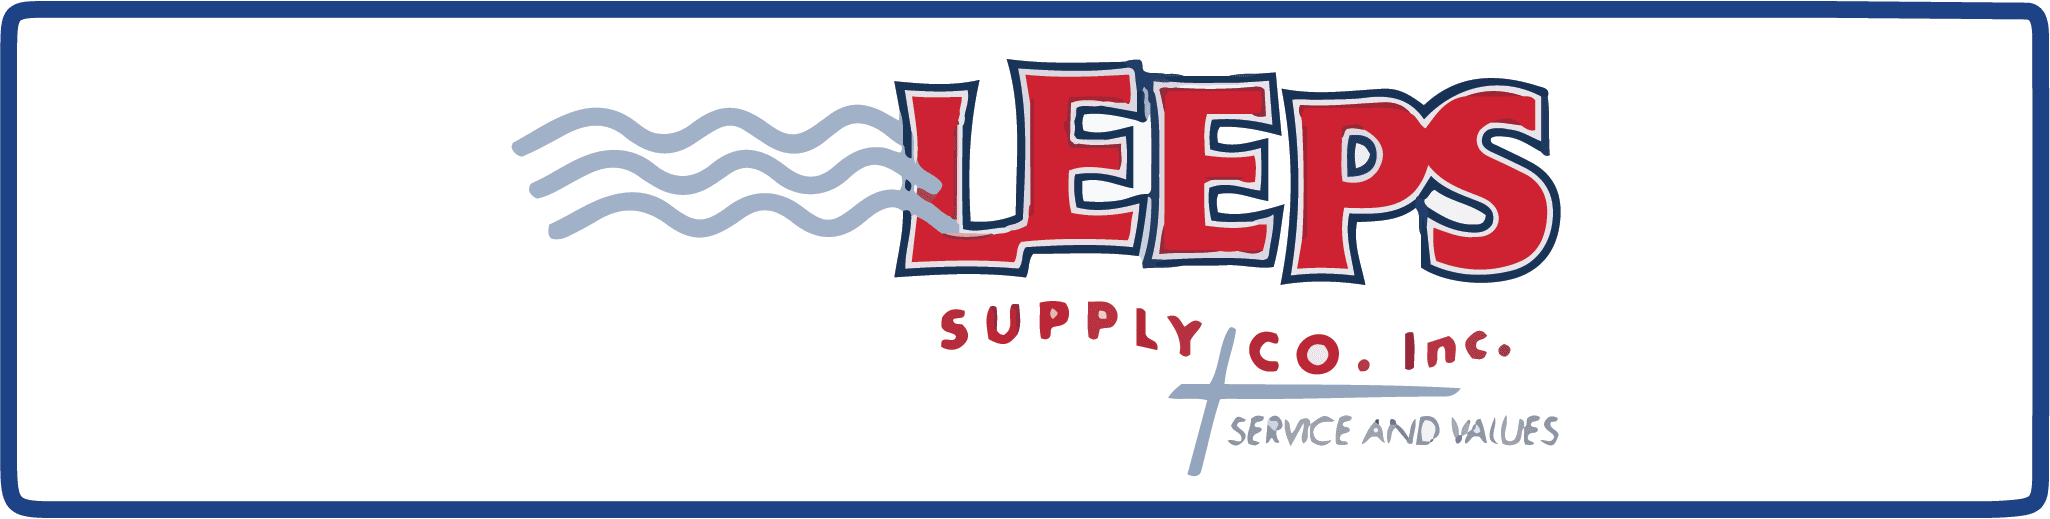 Leeps Supply